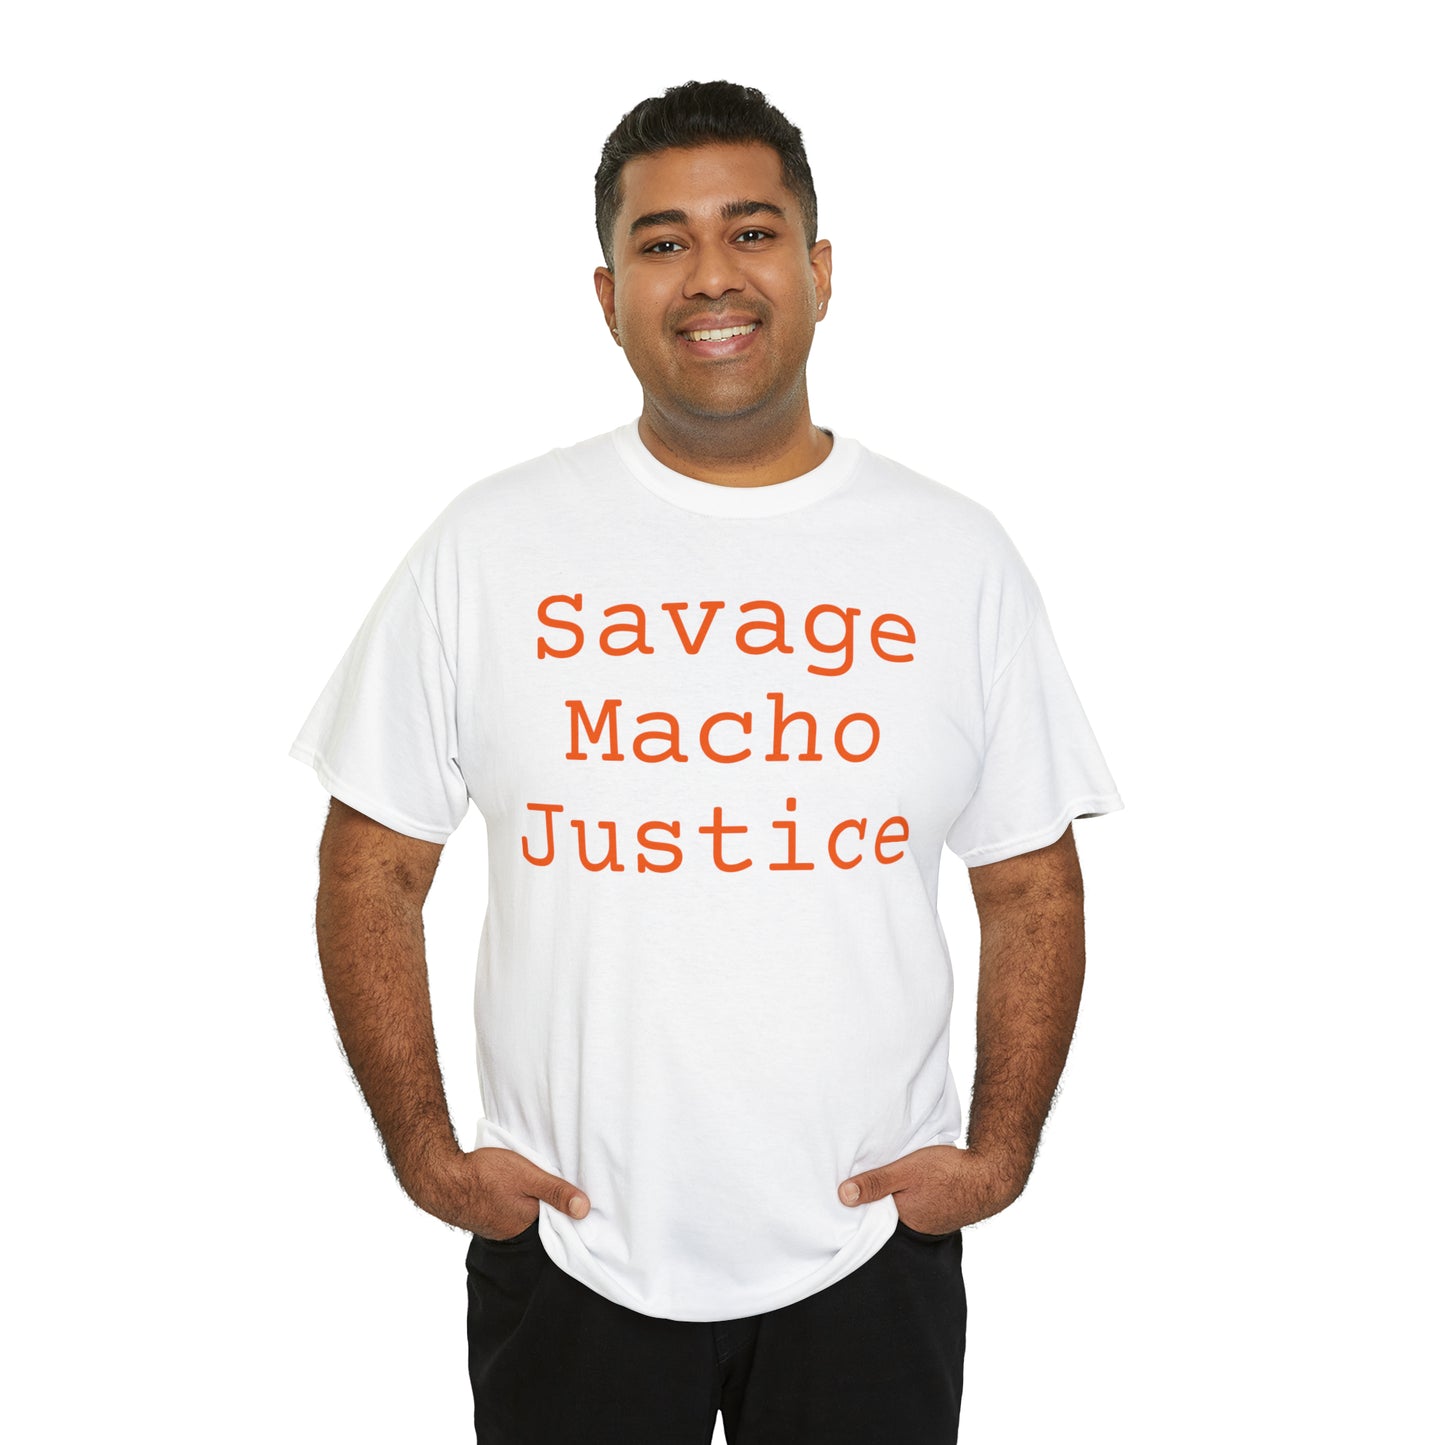 Savage Macho - Hurts Shirts Collection